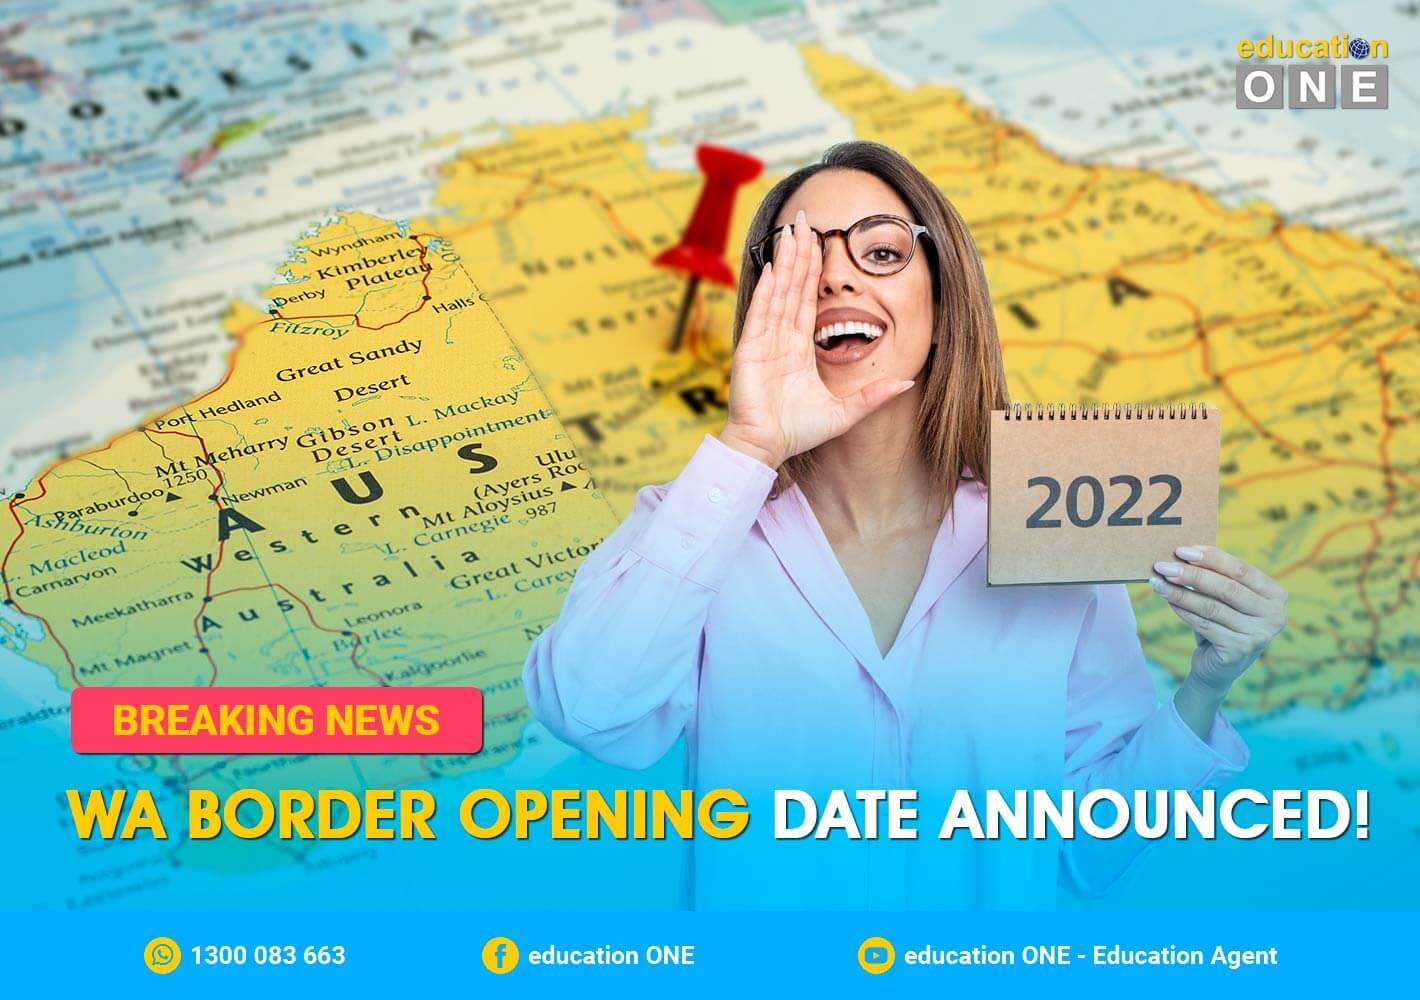 WA Border Opening Date in 2022 Announced